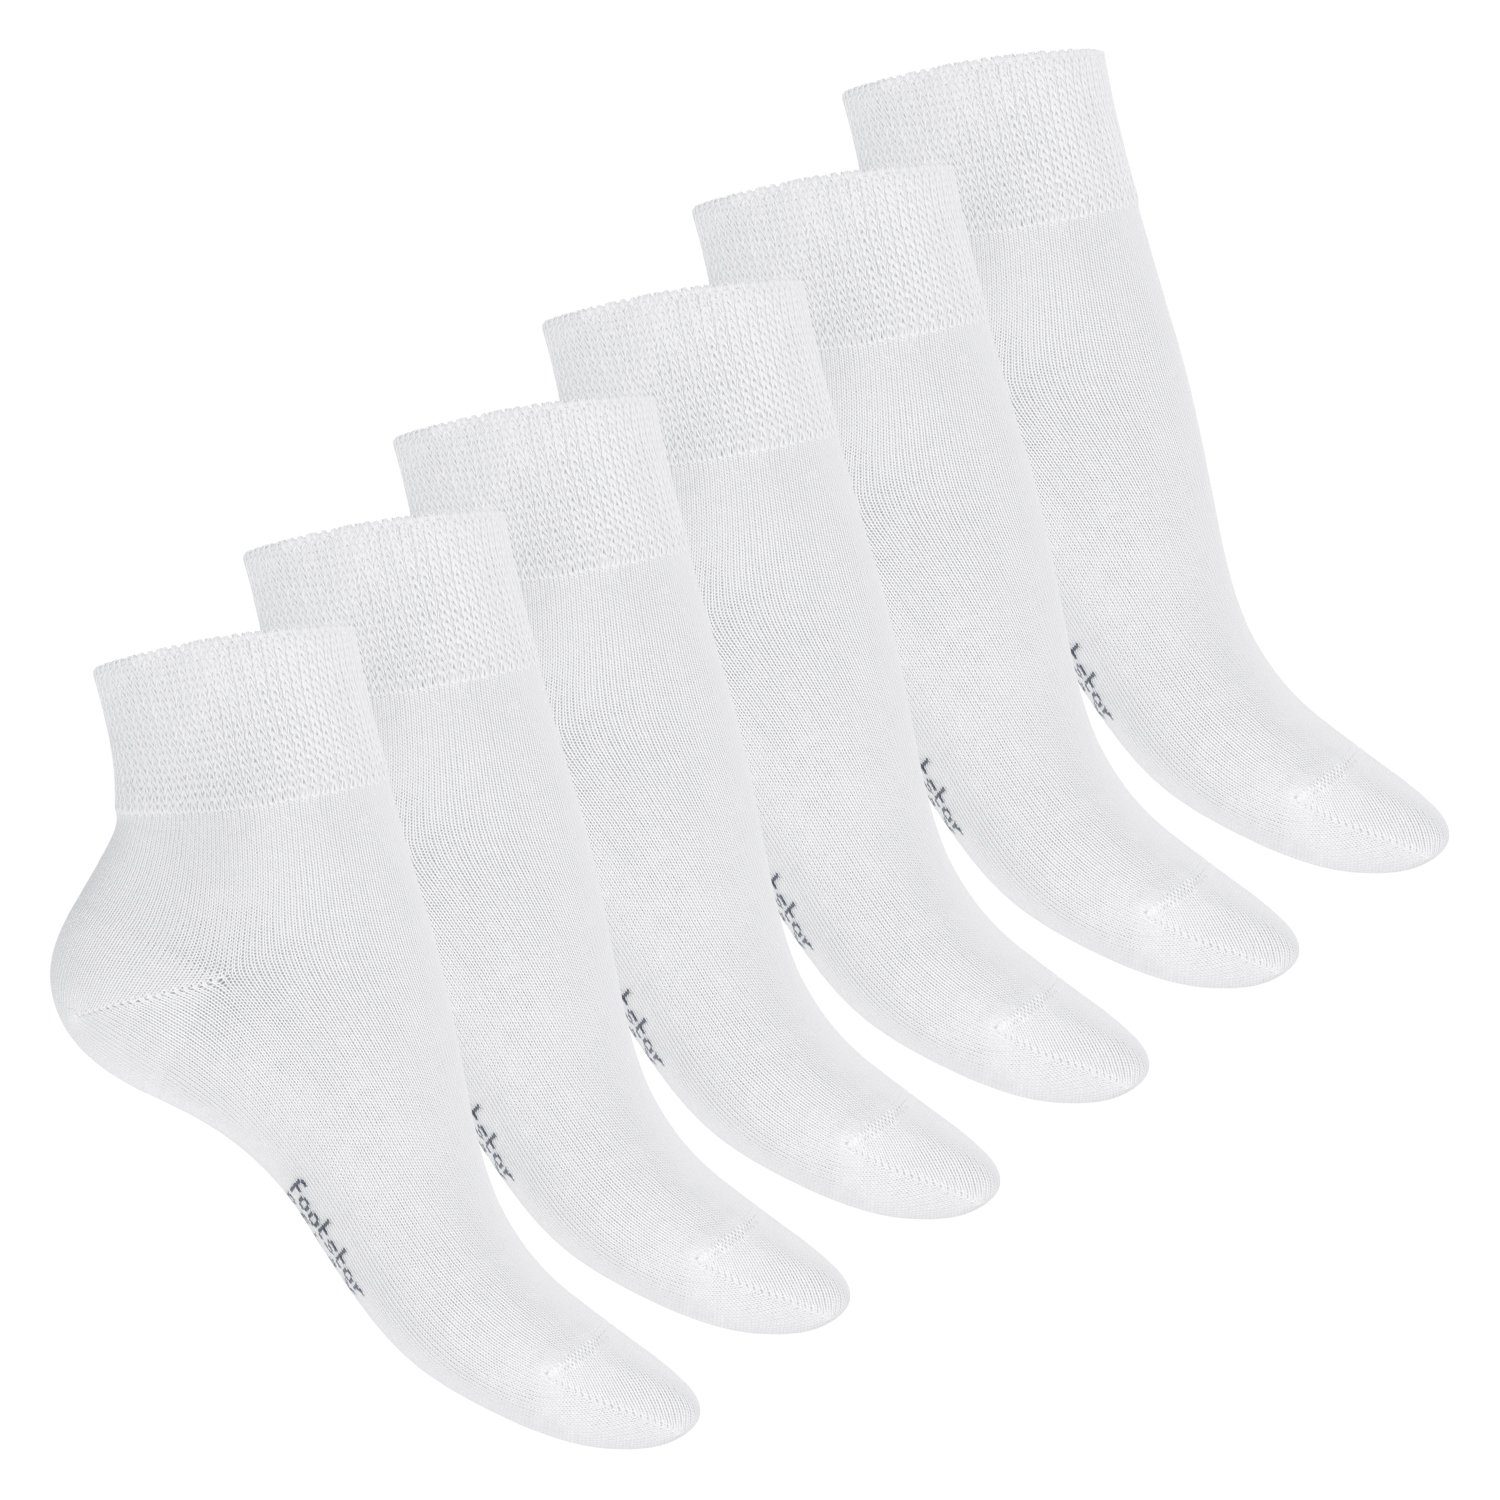 Footstar Diabetikersocken Gesundheits Kurzschaft Socken (6 Paar), Nahtfrei, Diabetiker Weiss